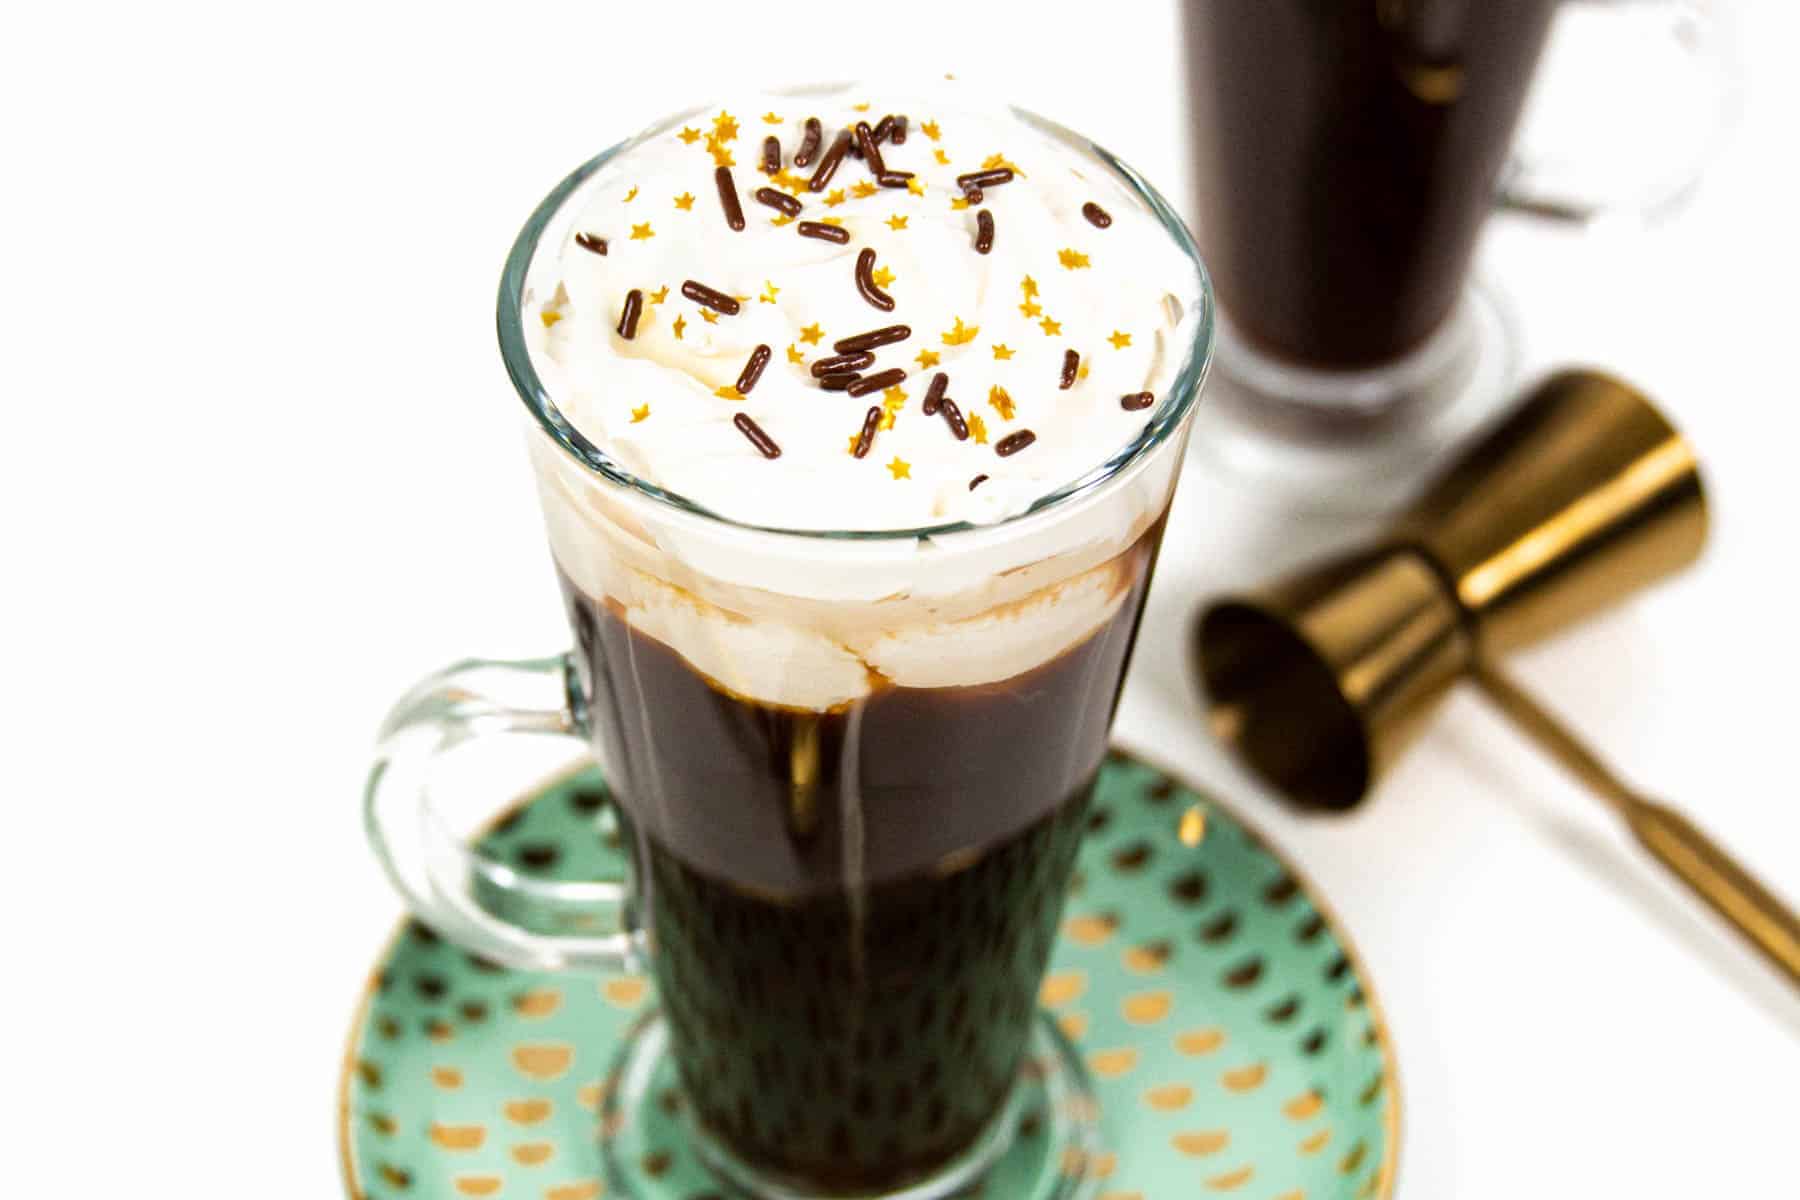 a glass mug with Irish coffee and whipped cream on top.